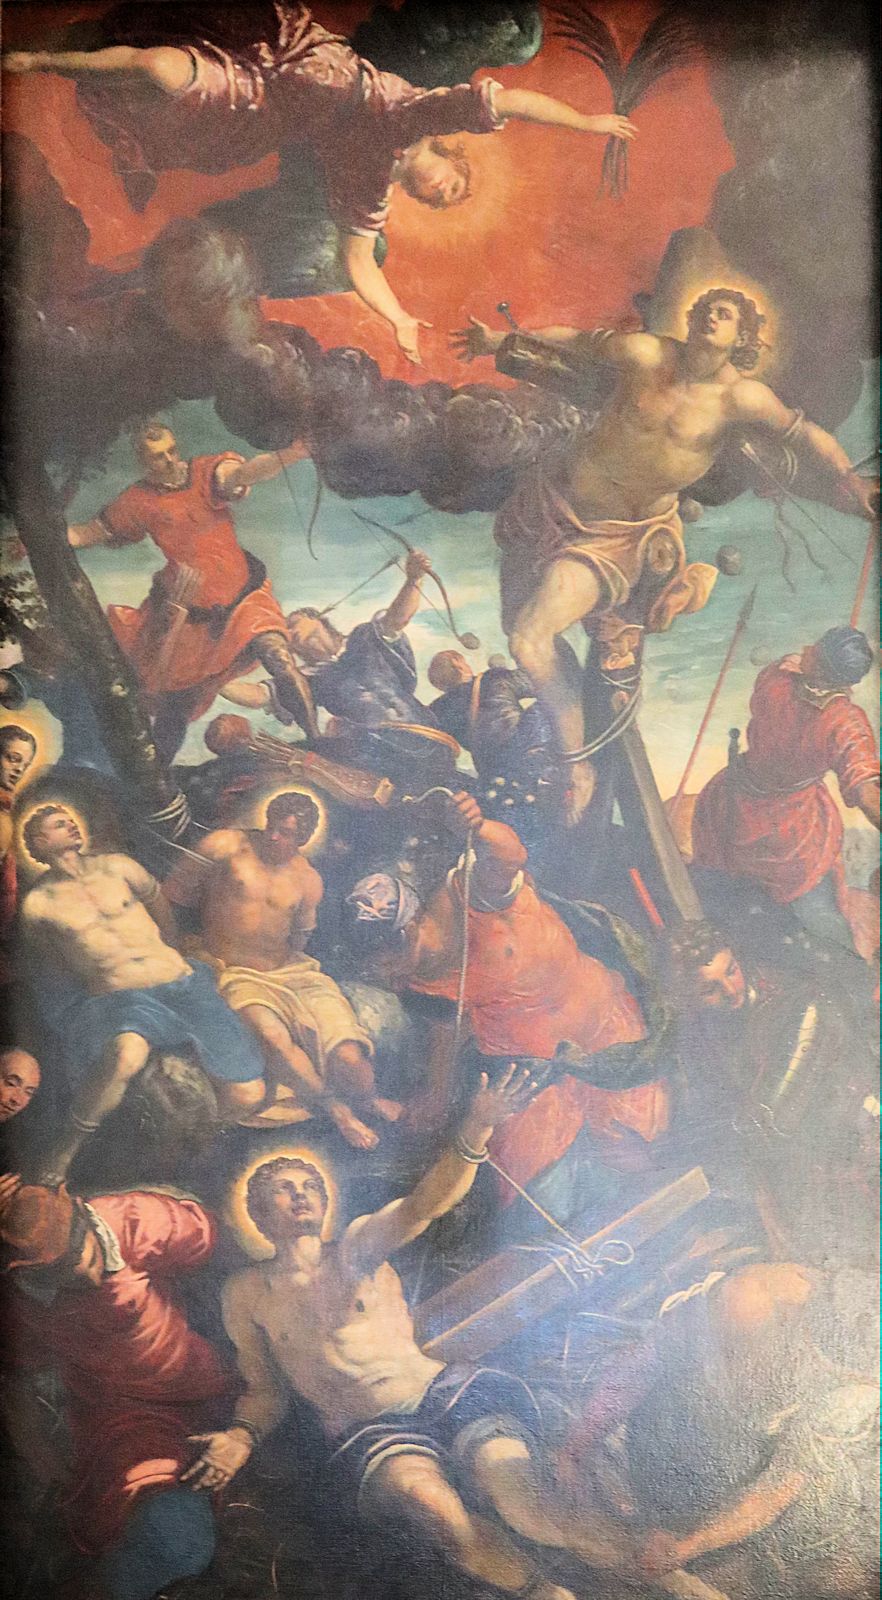 Jacopo und Domenico Tintoretto: Das Martyrium von Kosmas und Damian, um 1600, in der Kirche San Giorgio Maggiore in Venedig